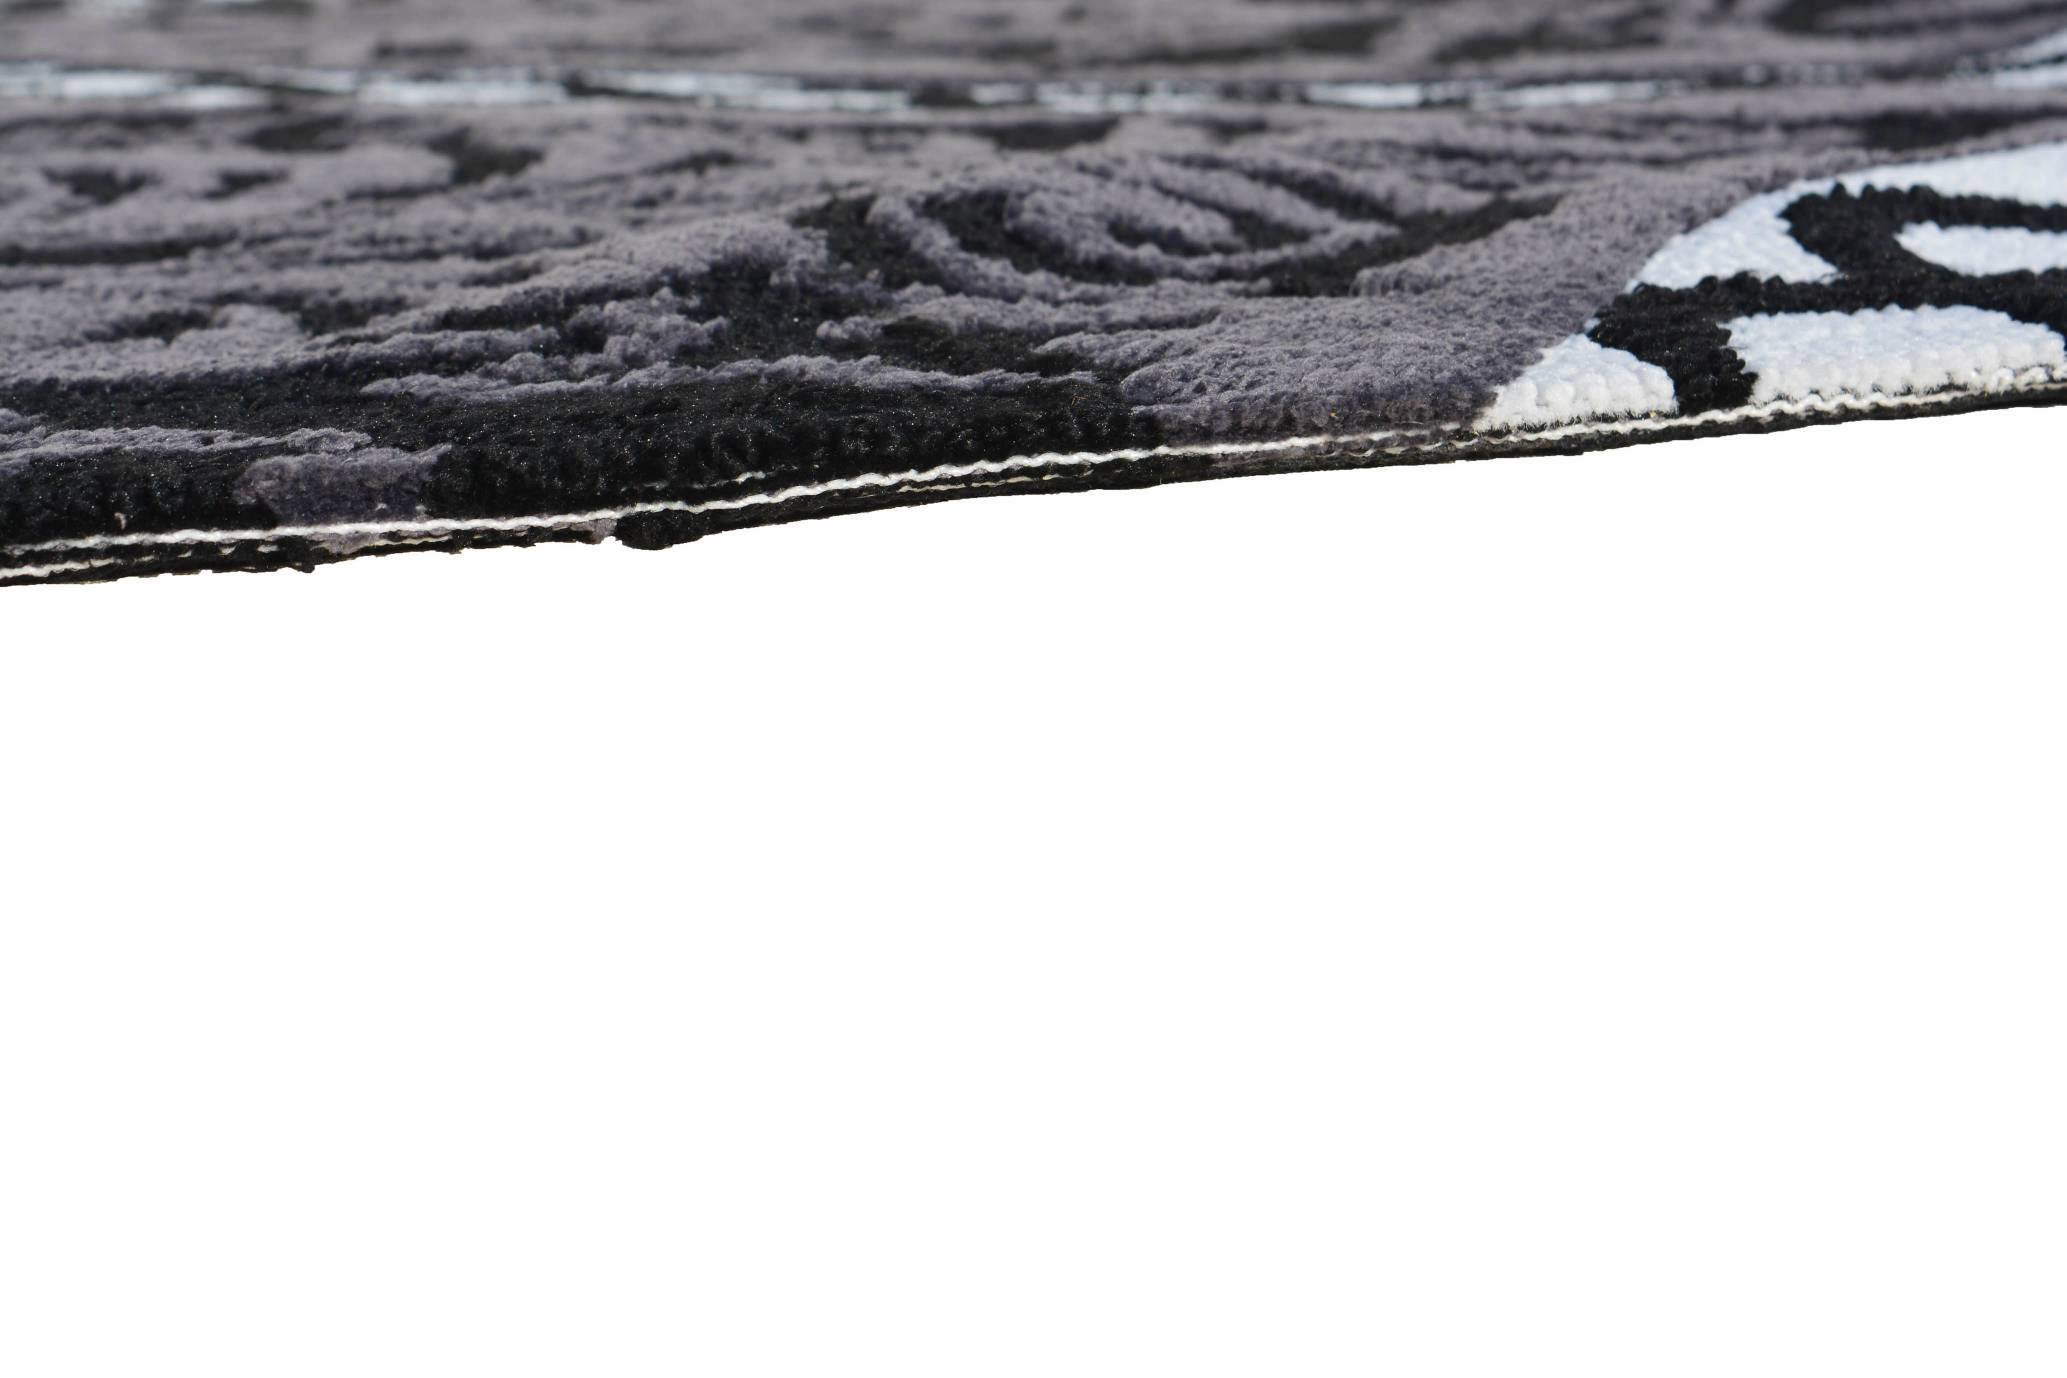 Detec™ Presto Hand Tufted Modern Abstract Polyester Designed Carpet